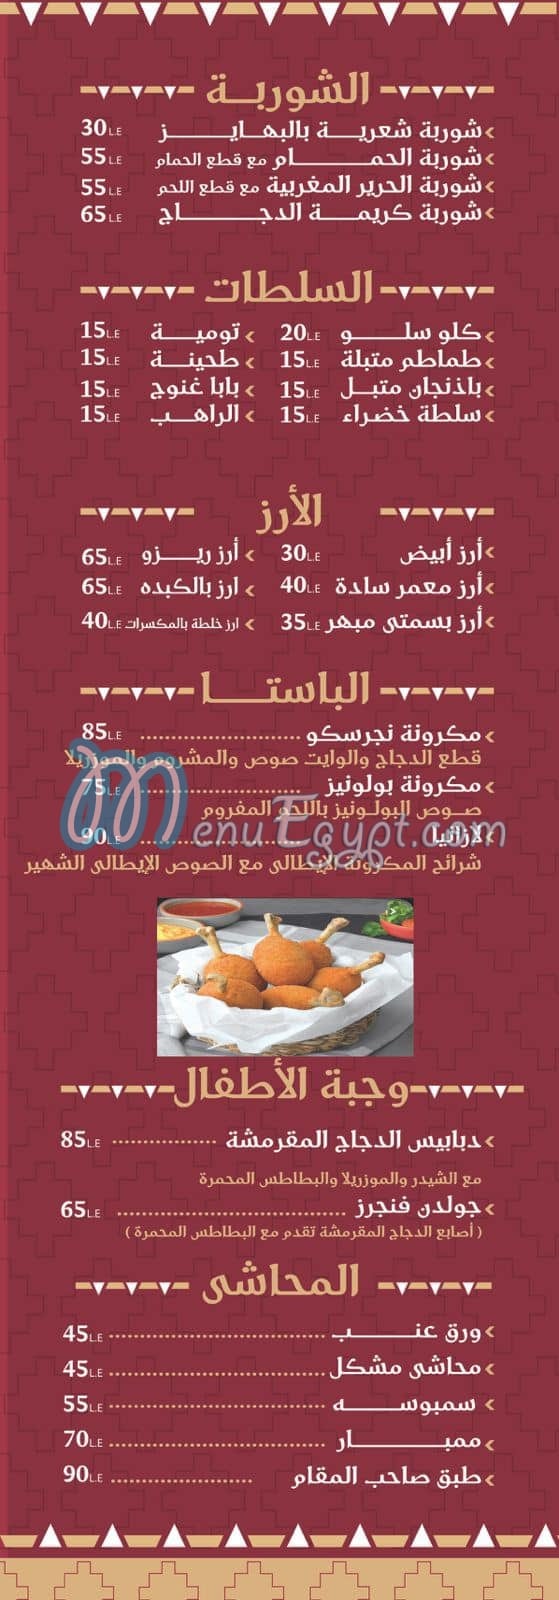 Saheb Almqam restaurant egypt